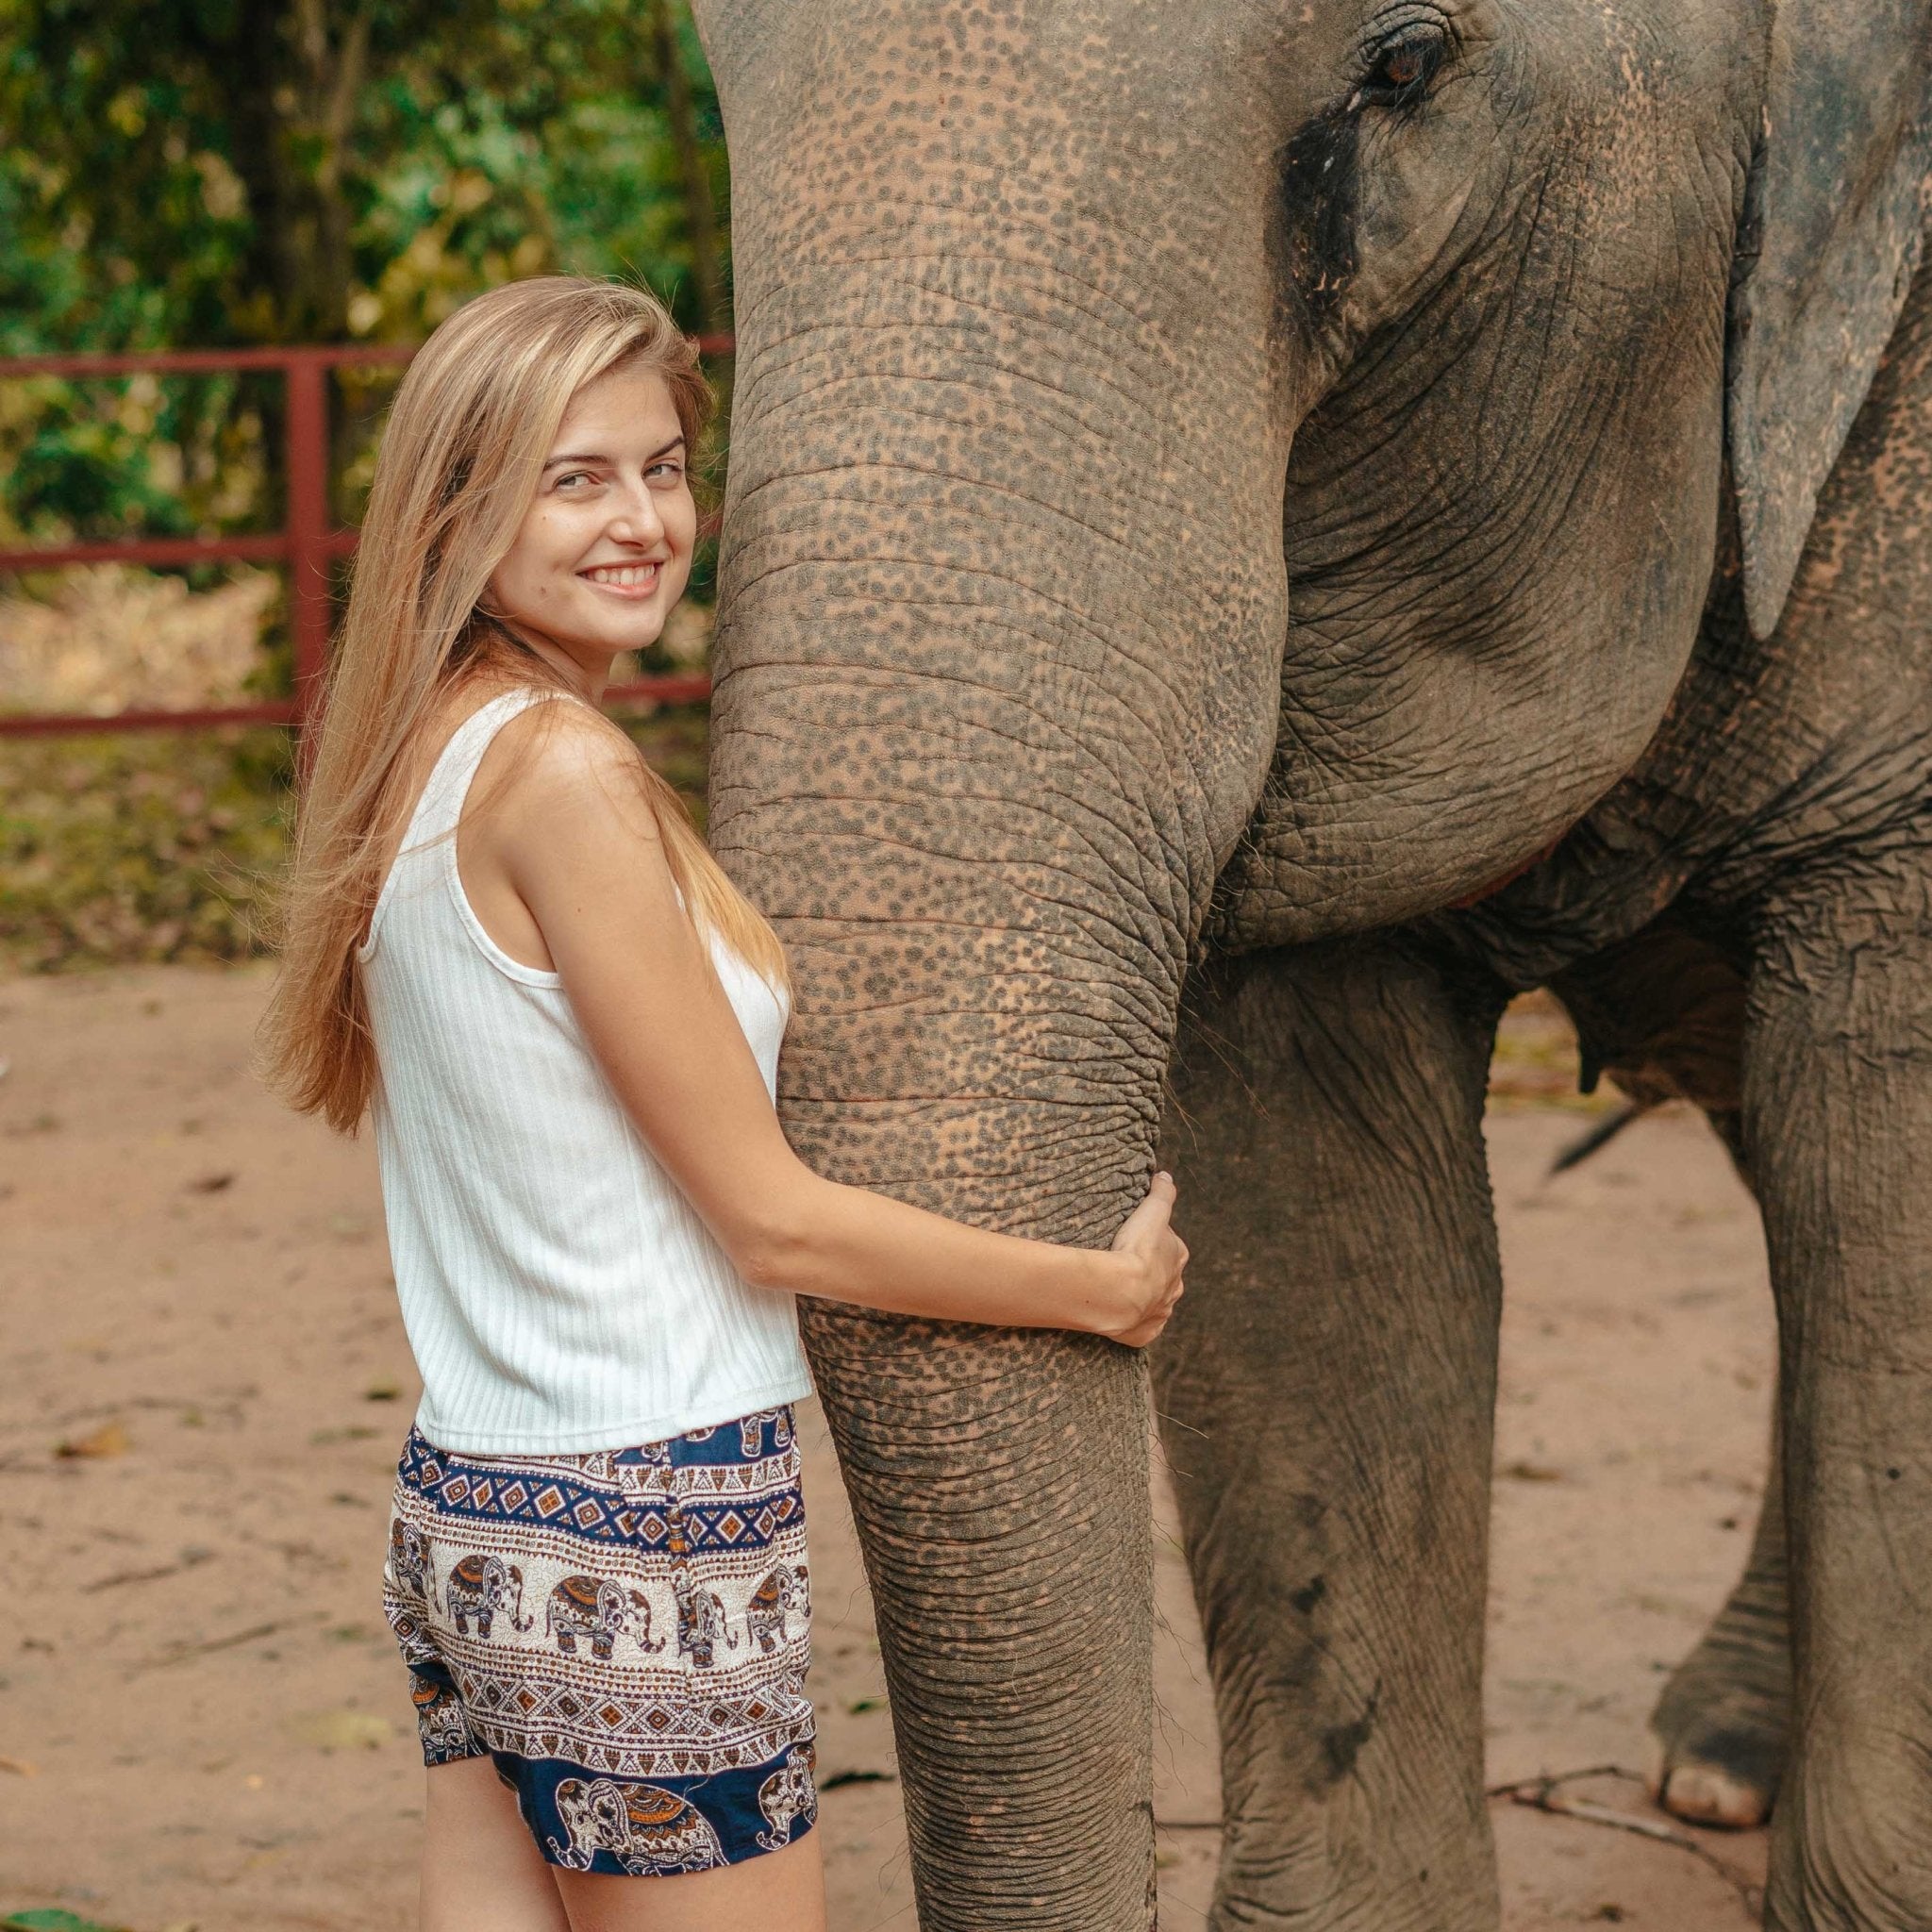 ANGKOR SHORTS Elepanta Women's Shorts - Buy Today Elephant Pants Jewelry And Bohemian Clothes Handmade In Thailand Help To Save The Elephants FairTrade And Vegan